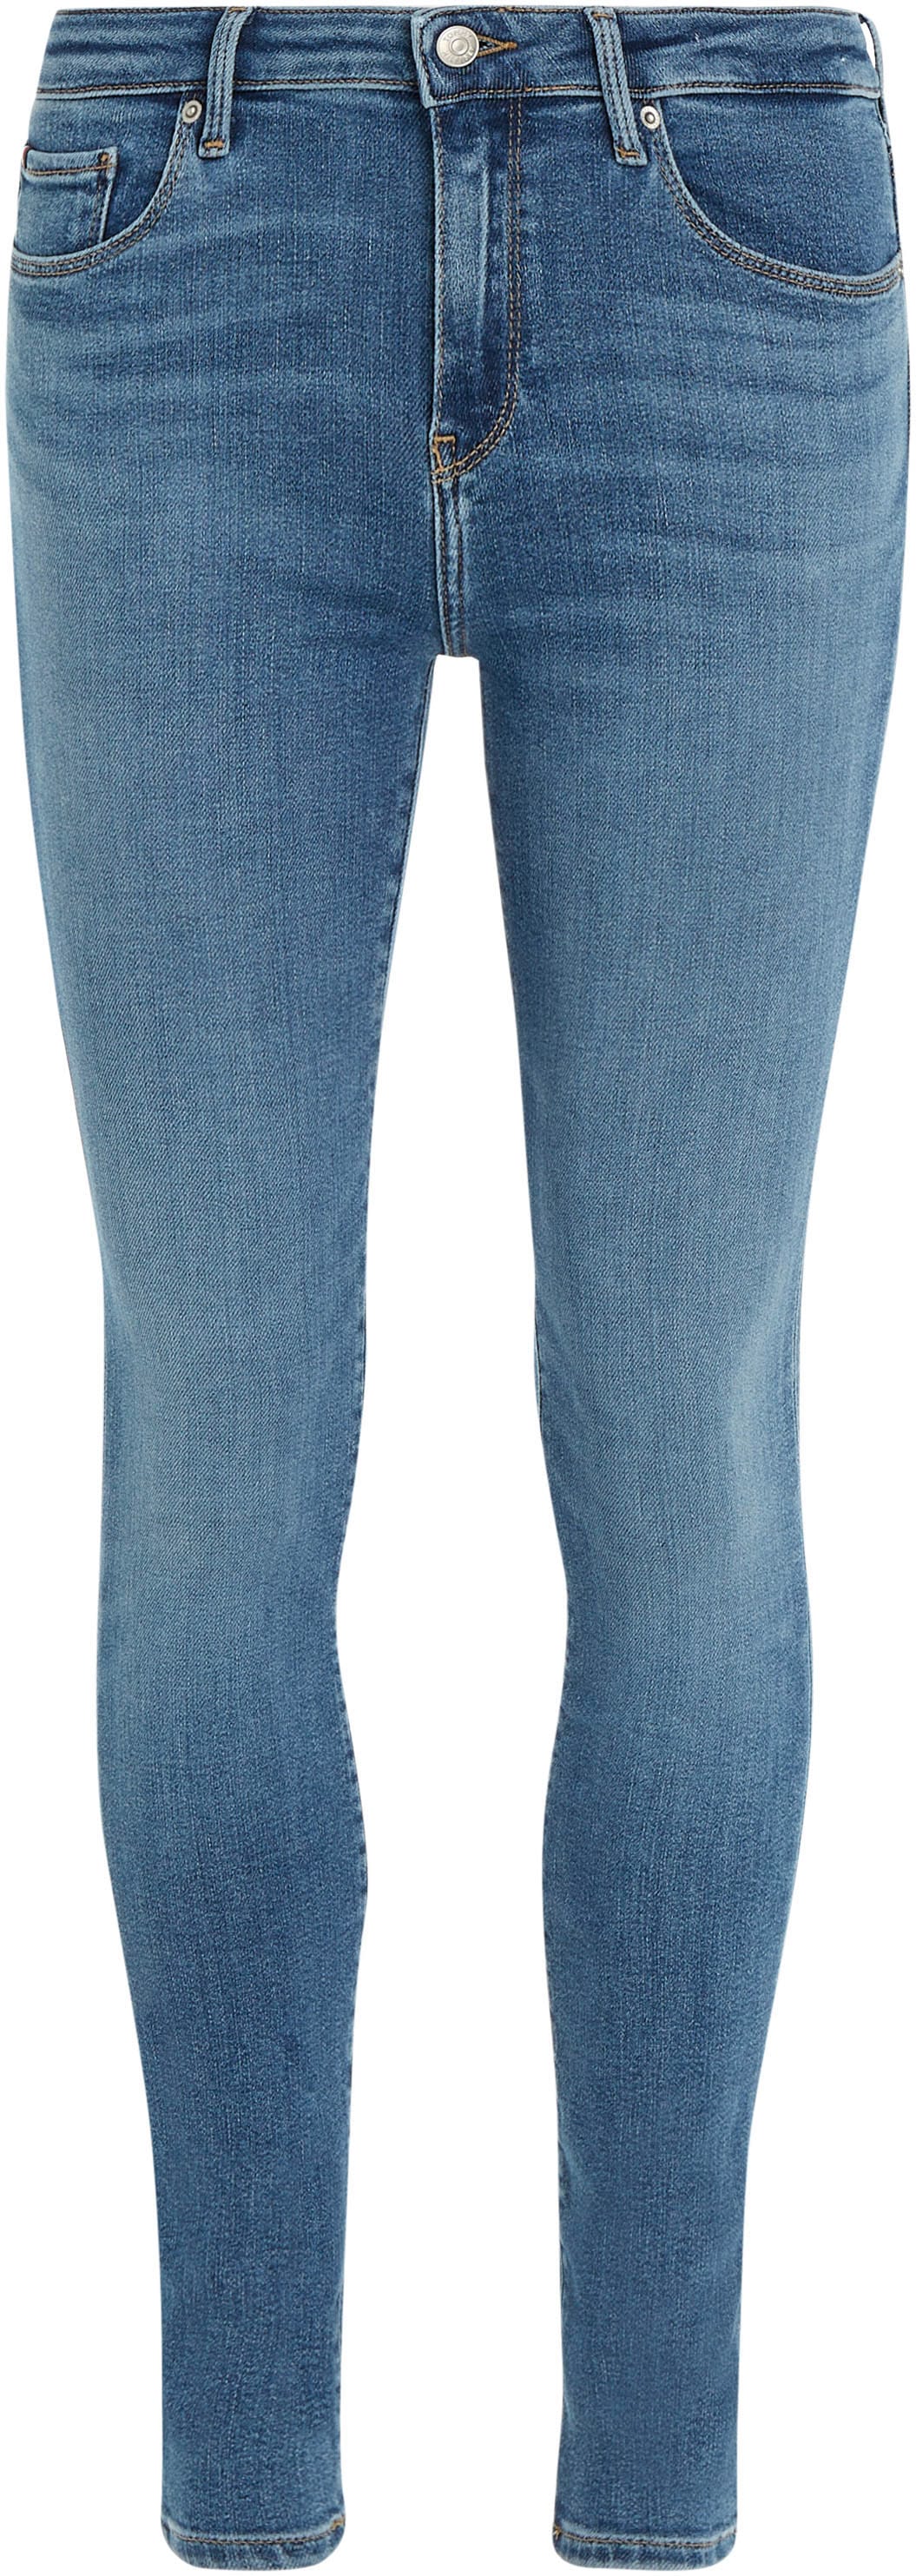 TH MEL«, | Skinny-fit-Jeans SKNNY Hilfiger mit Logoprägung für HW kaufen HARLEM FLX Curve BAUR Tommy »CRV